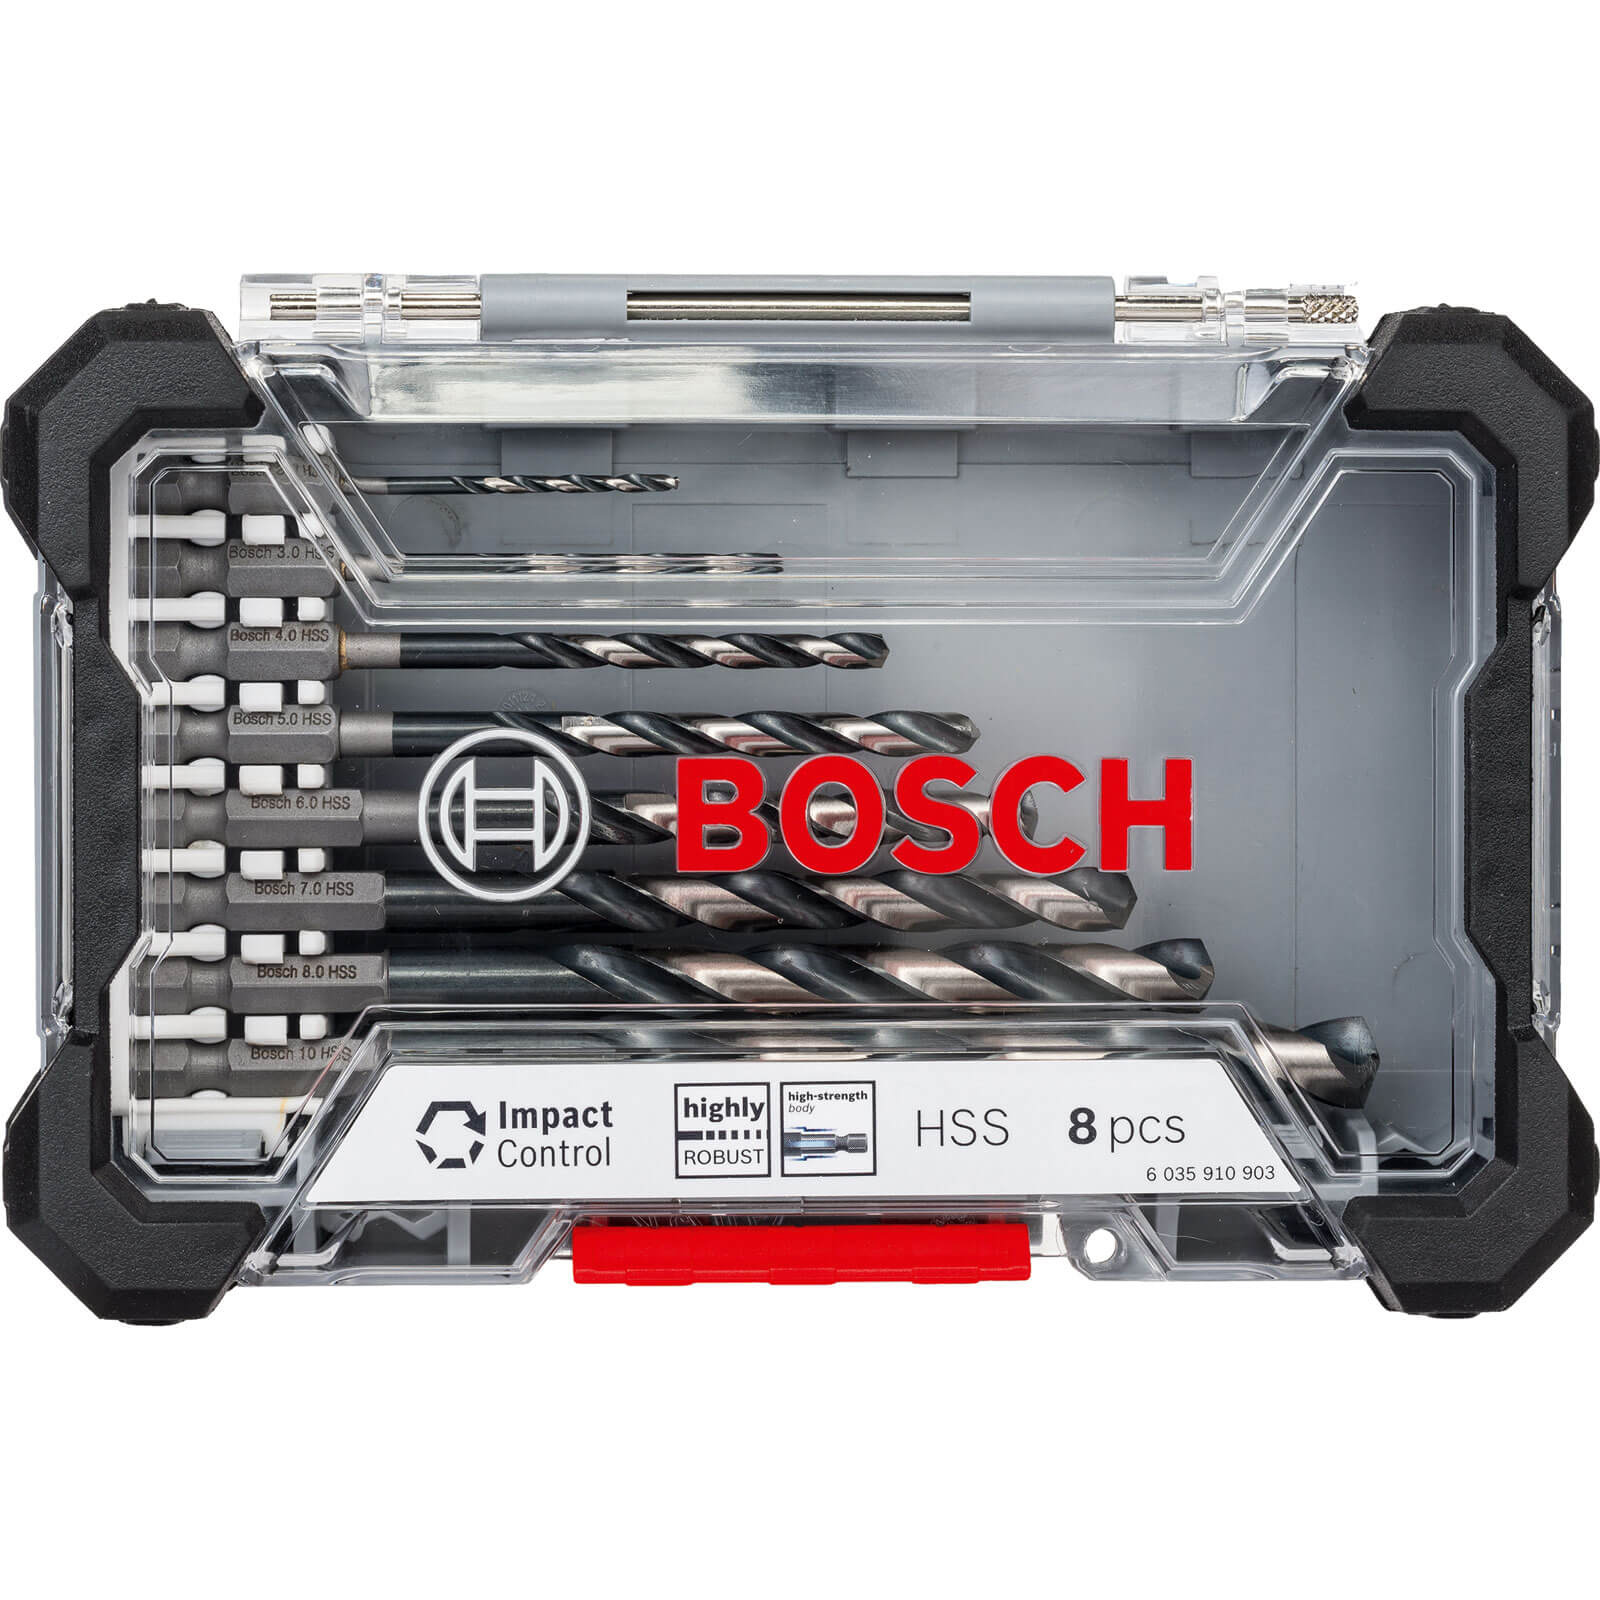 Photo of Bosch 8 Piece Impact Control Metal Drill Bit Set